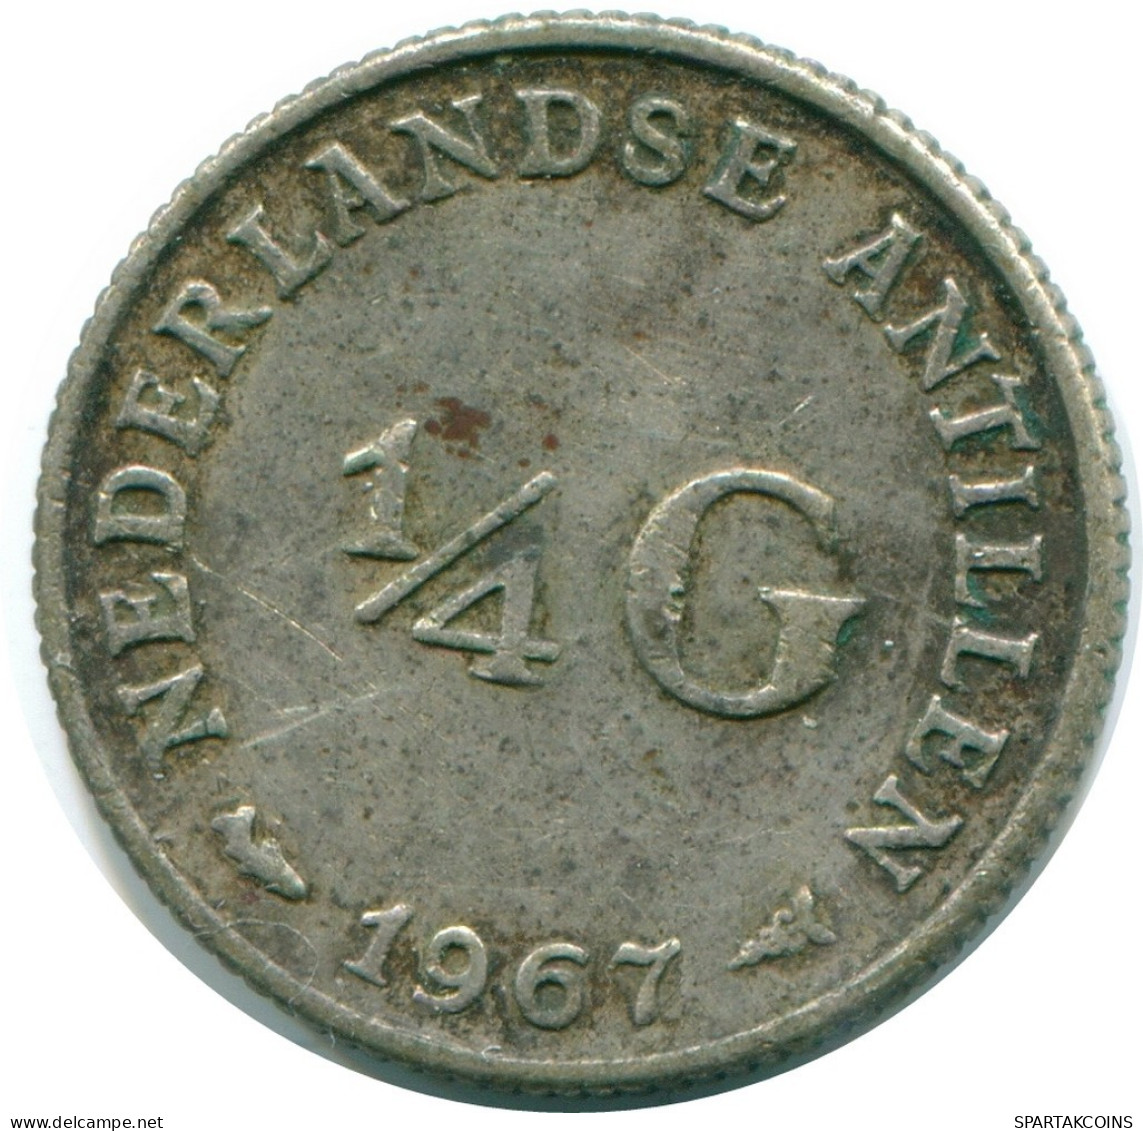 1/4 GULDEN 1967 NETHERLANDS ANTILLES SILVER Colonial Coin #NL11589.4.U.A - Antilles Néerlandaises